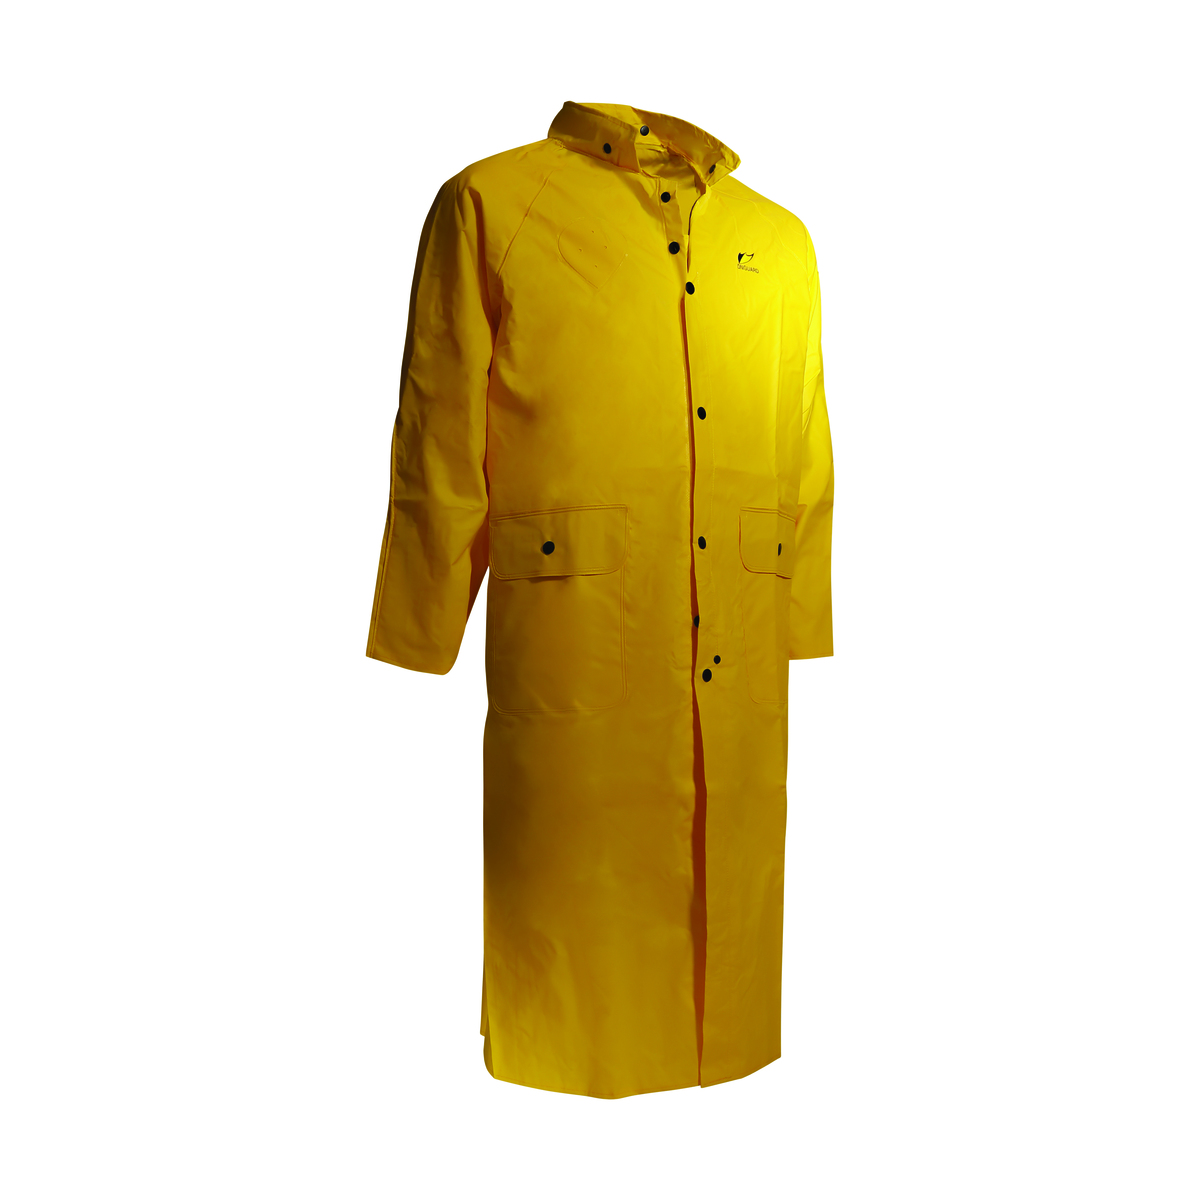 Dunlop® Protective Footwear Small Yellow Tuftex .3 mm Nylon/PVC Rain Coat With Hood Snaps